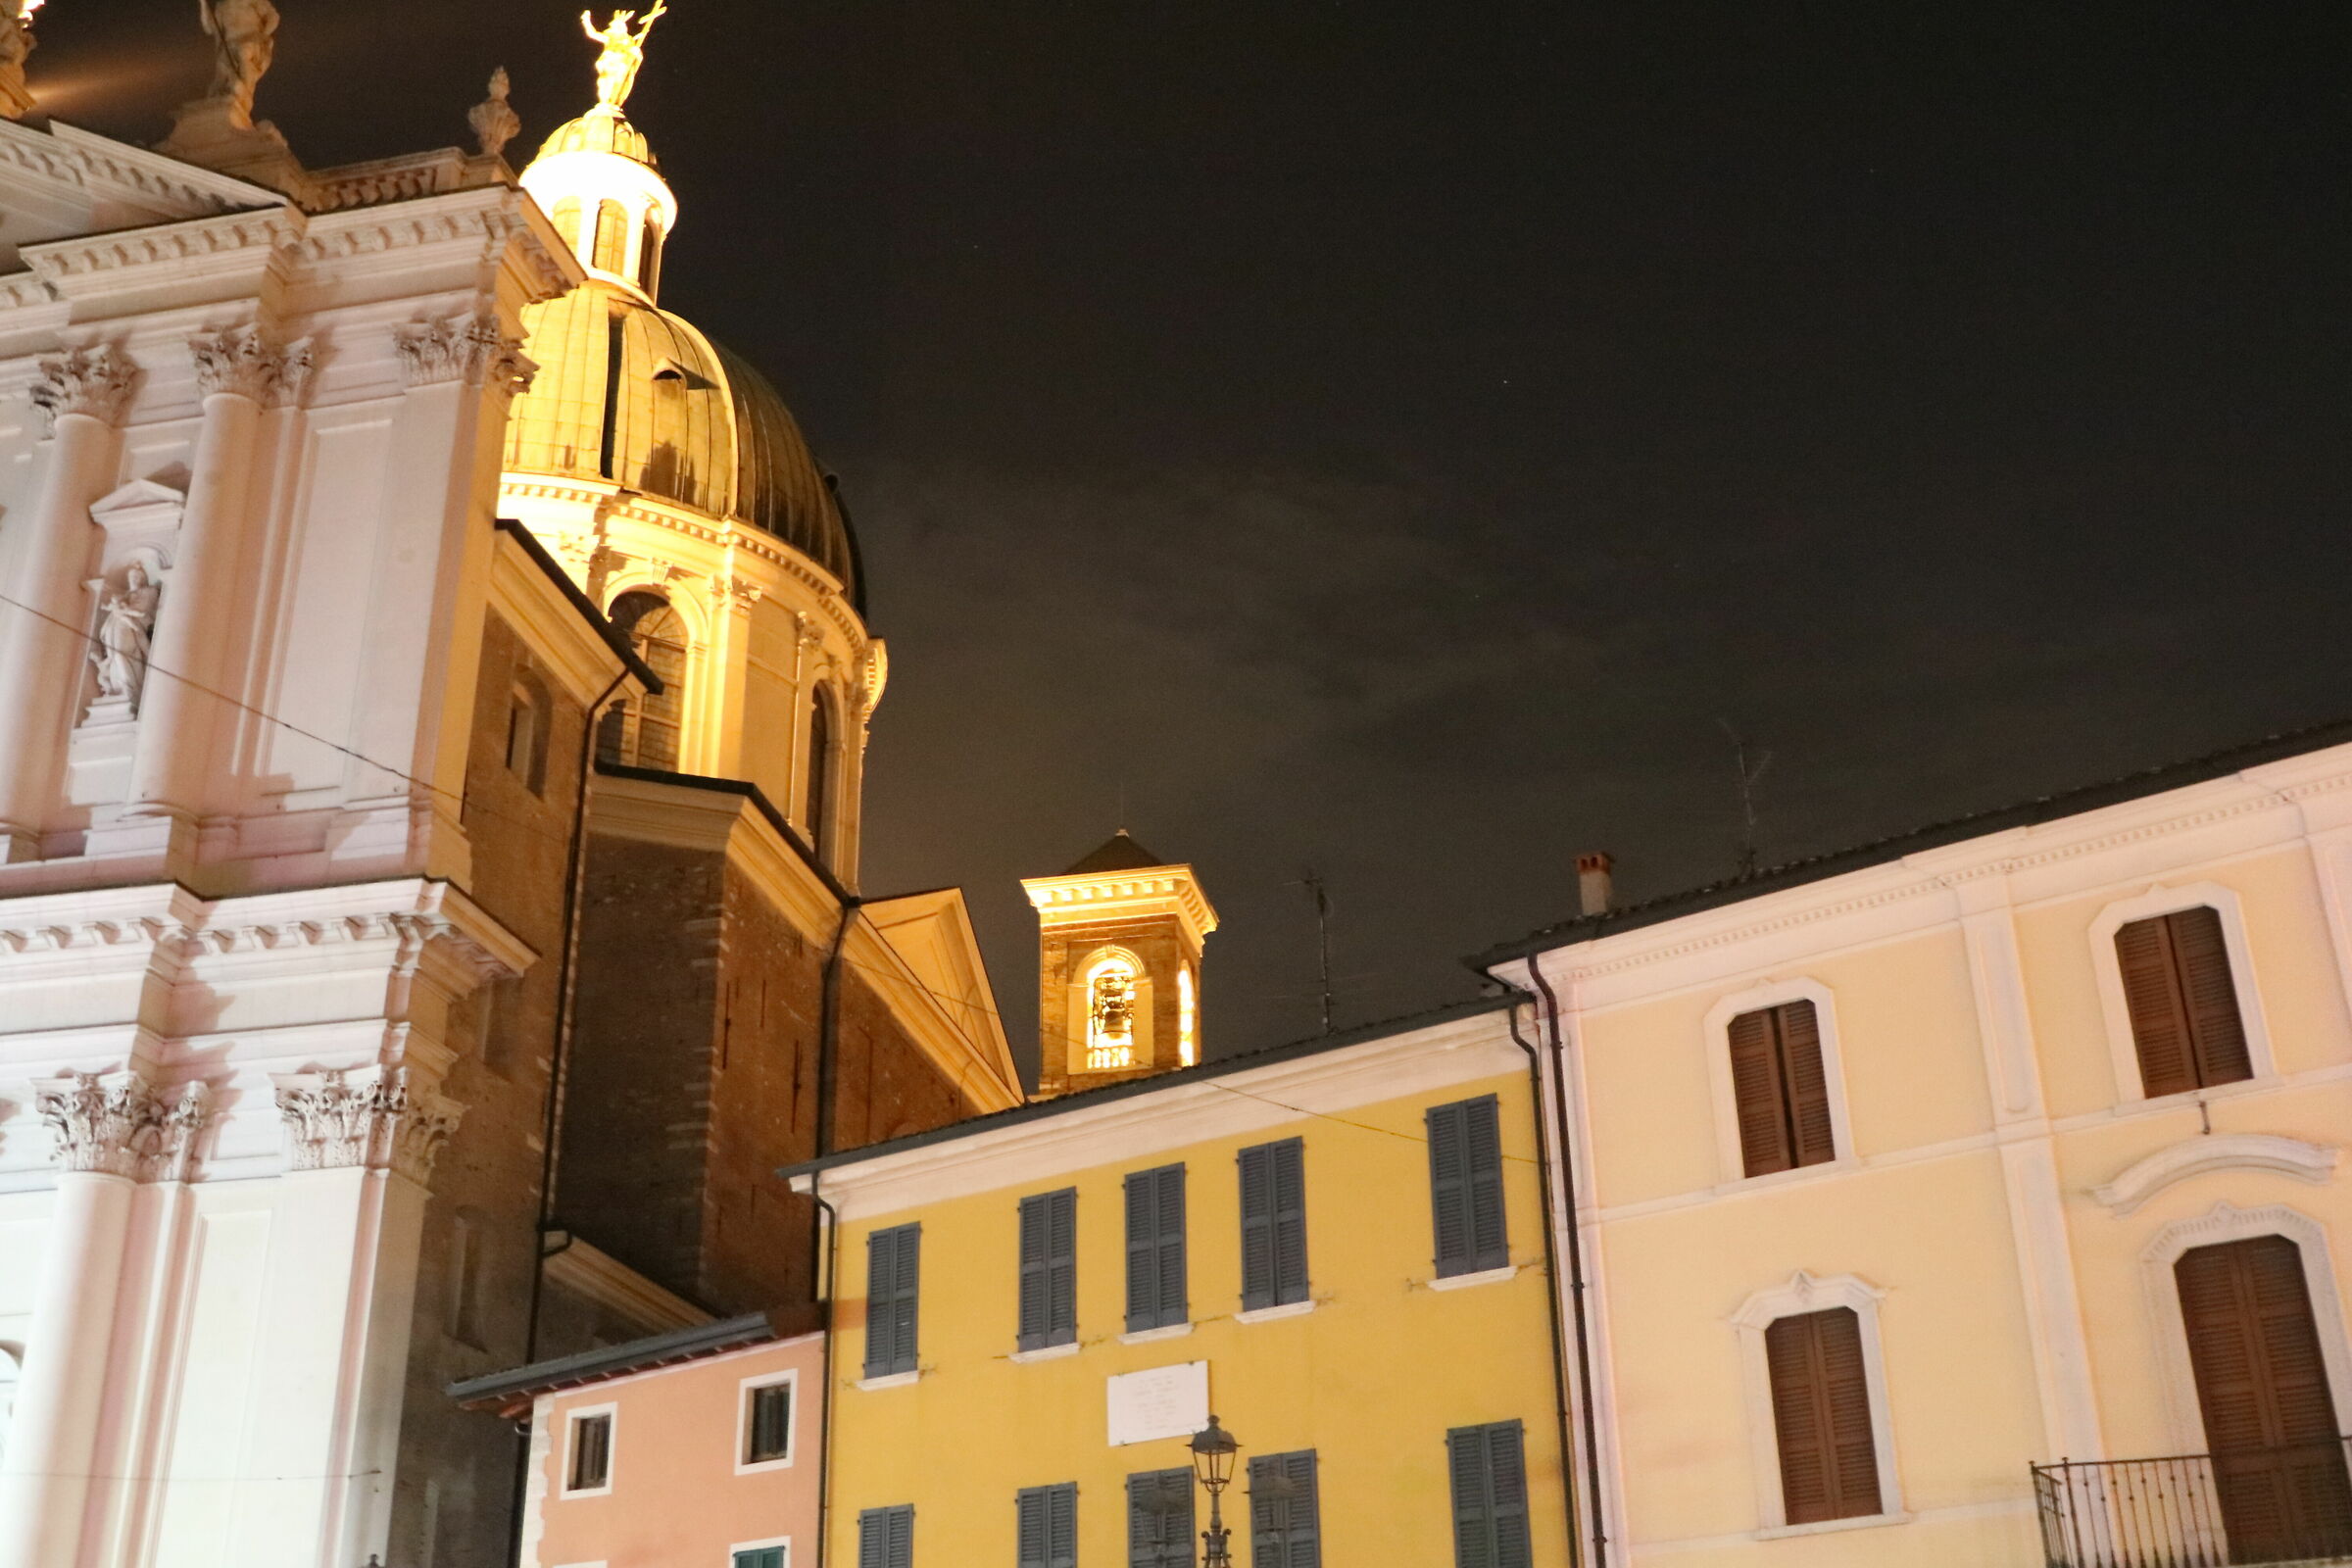 Montichiari in the night in August part 2 ...